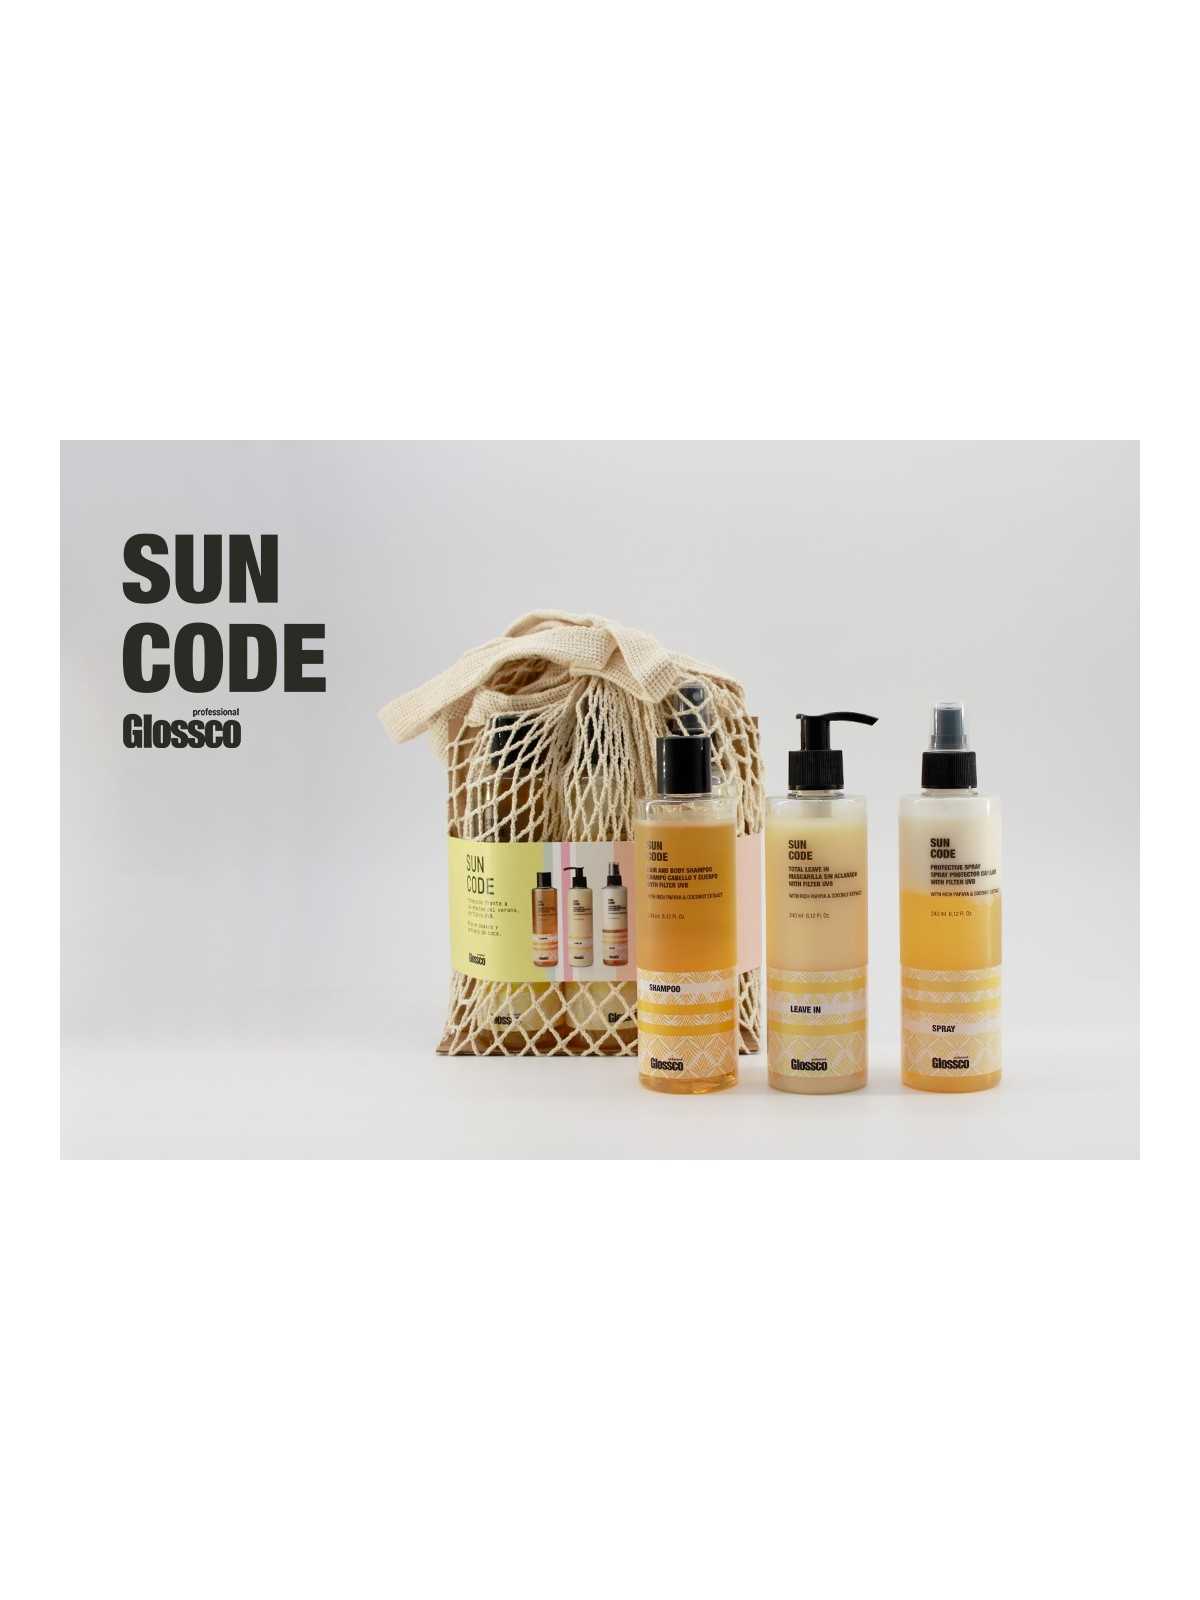 Comprar Glossco Pack línea solar Sun Code UVB en Inicio por sólo 28,59 € o un precio específico de 28,59 € en Thalie Care